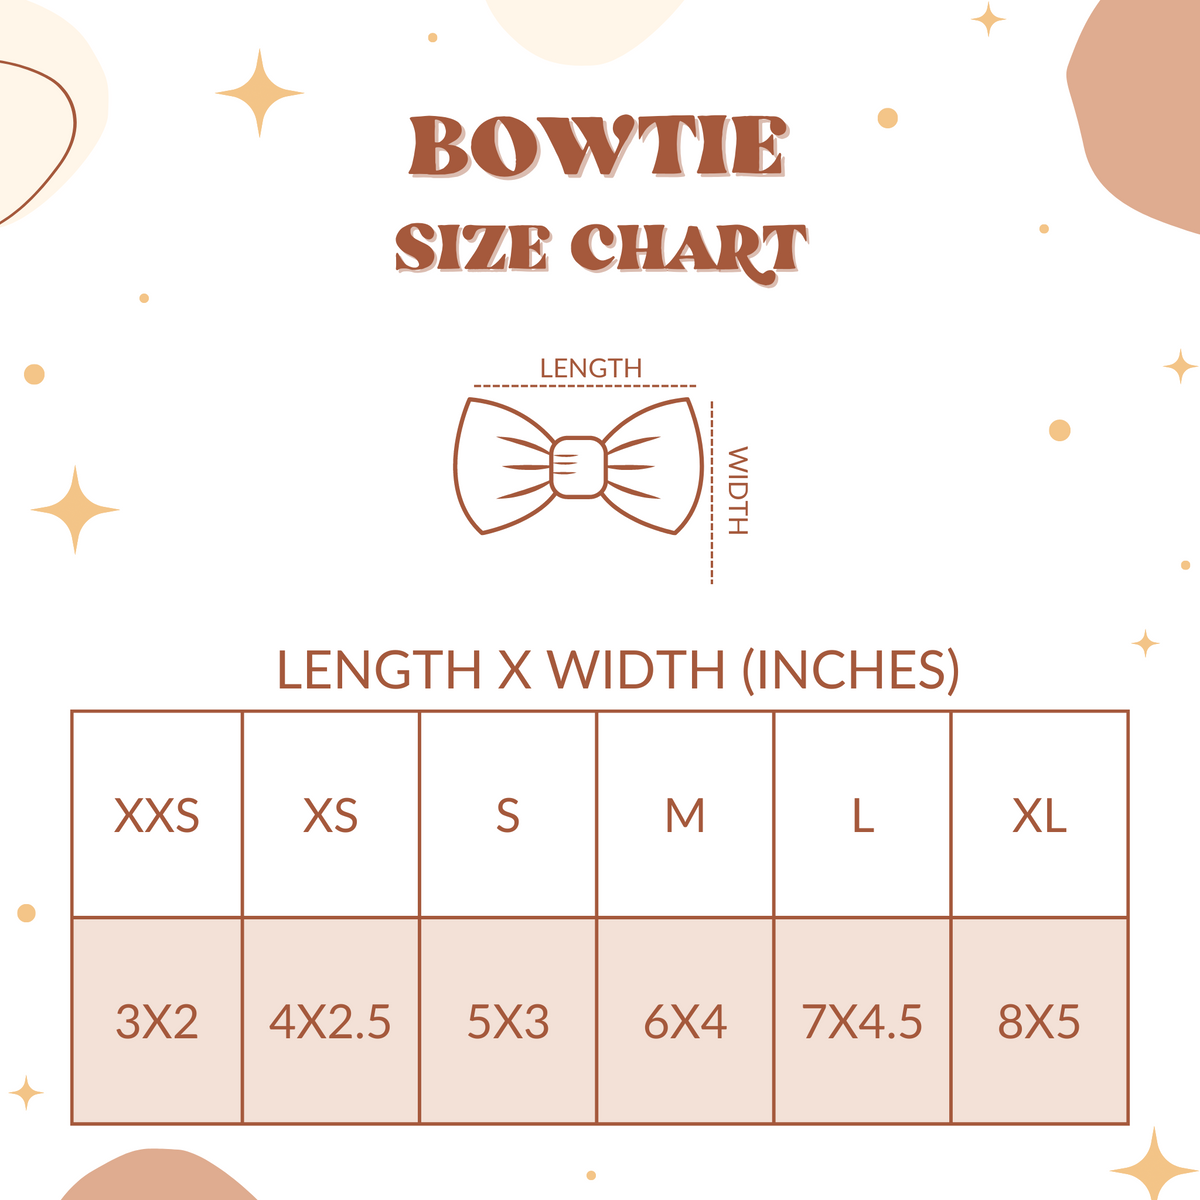 dog bowtie chart